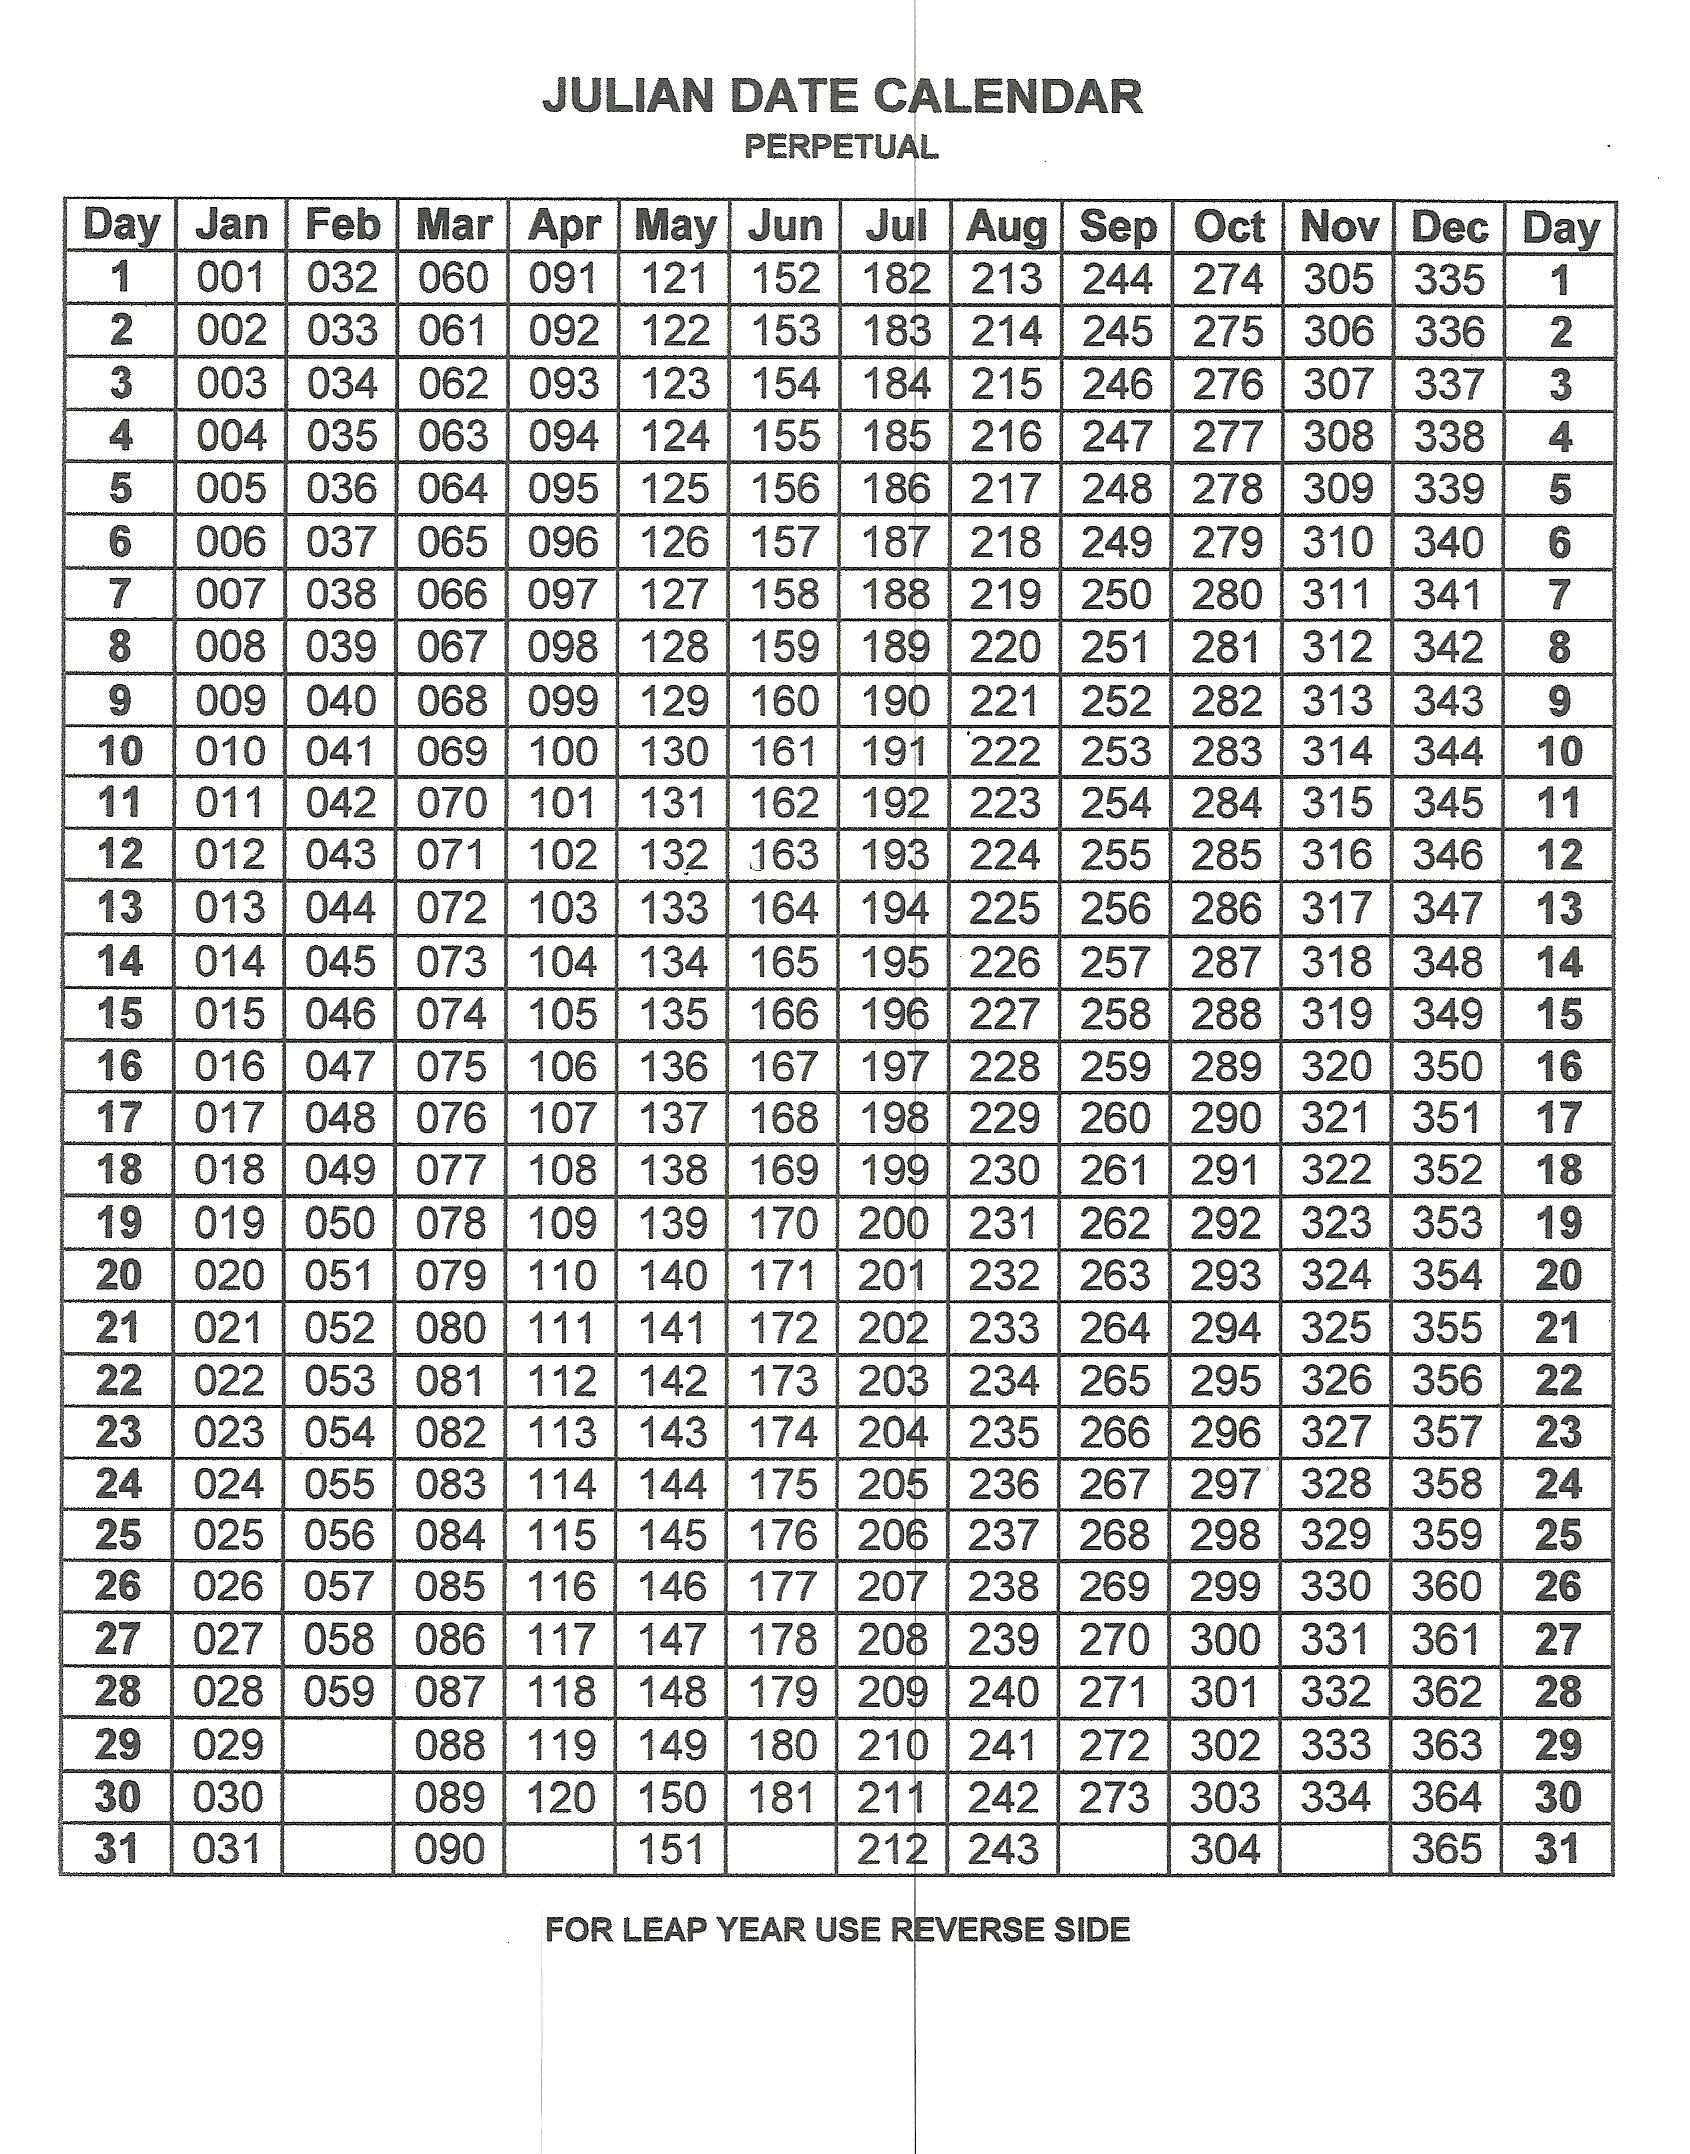 Perpetual Julian Date Calendar | Calendar Printables in Julian Date Calender For Leap Years Printable